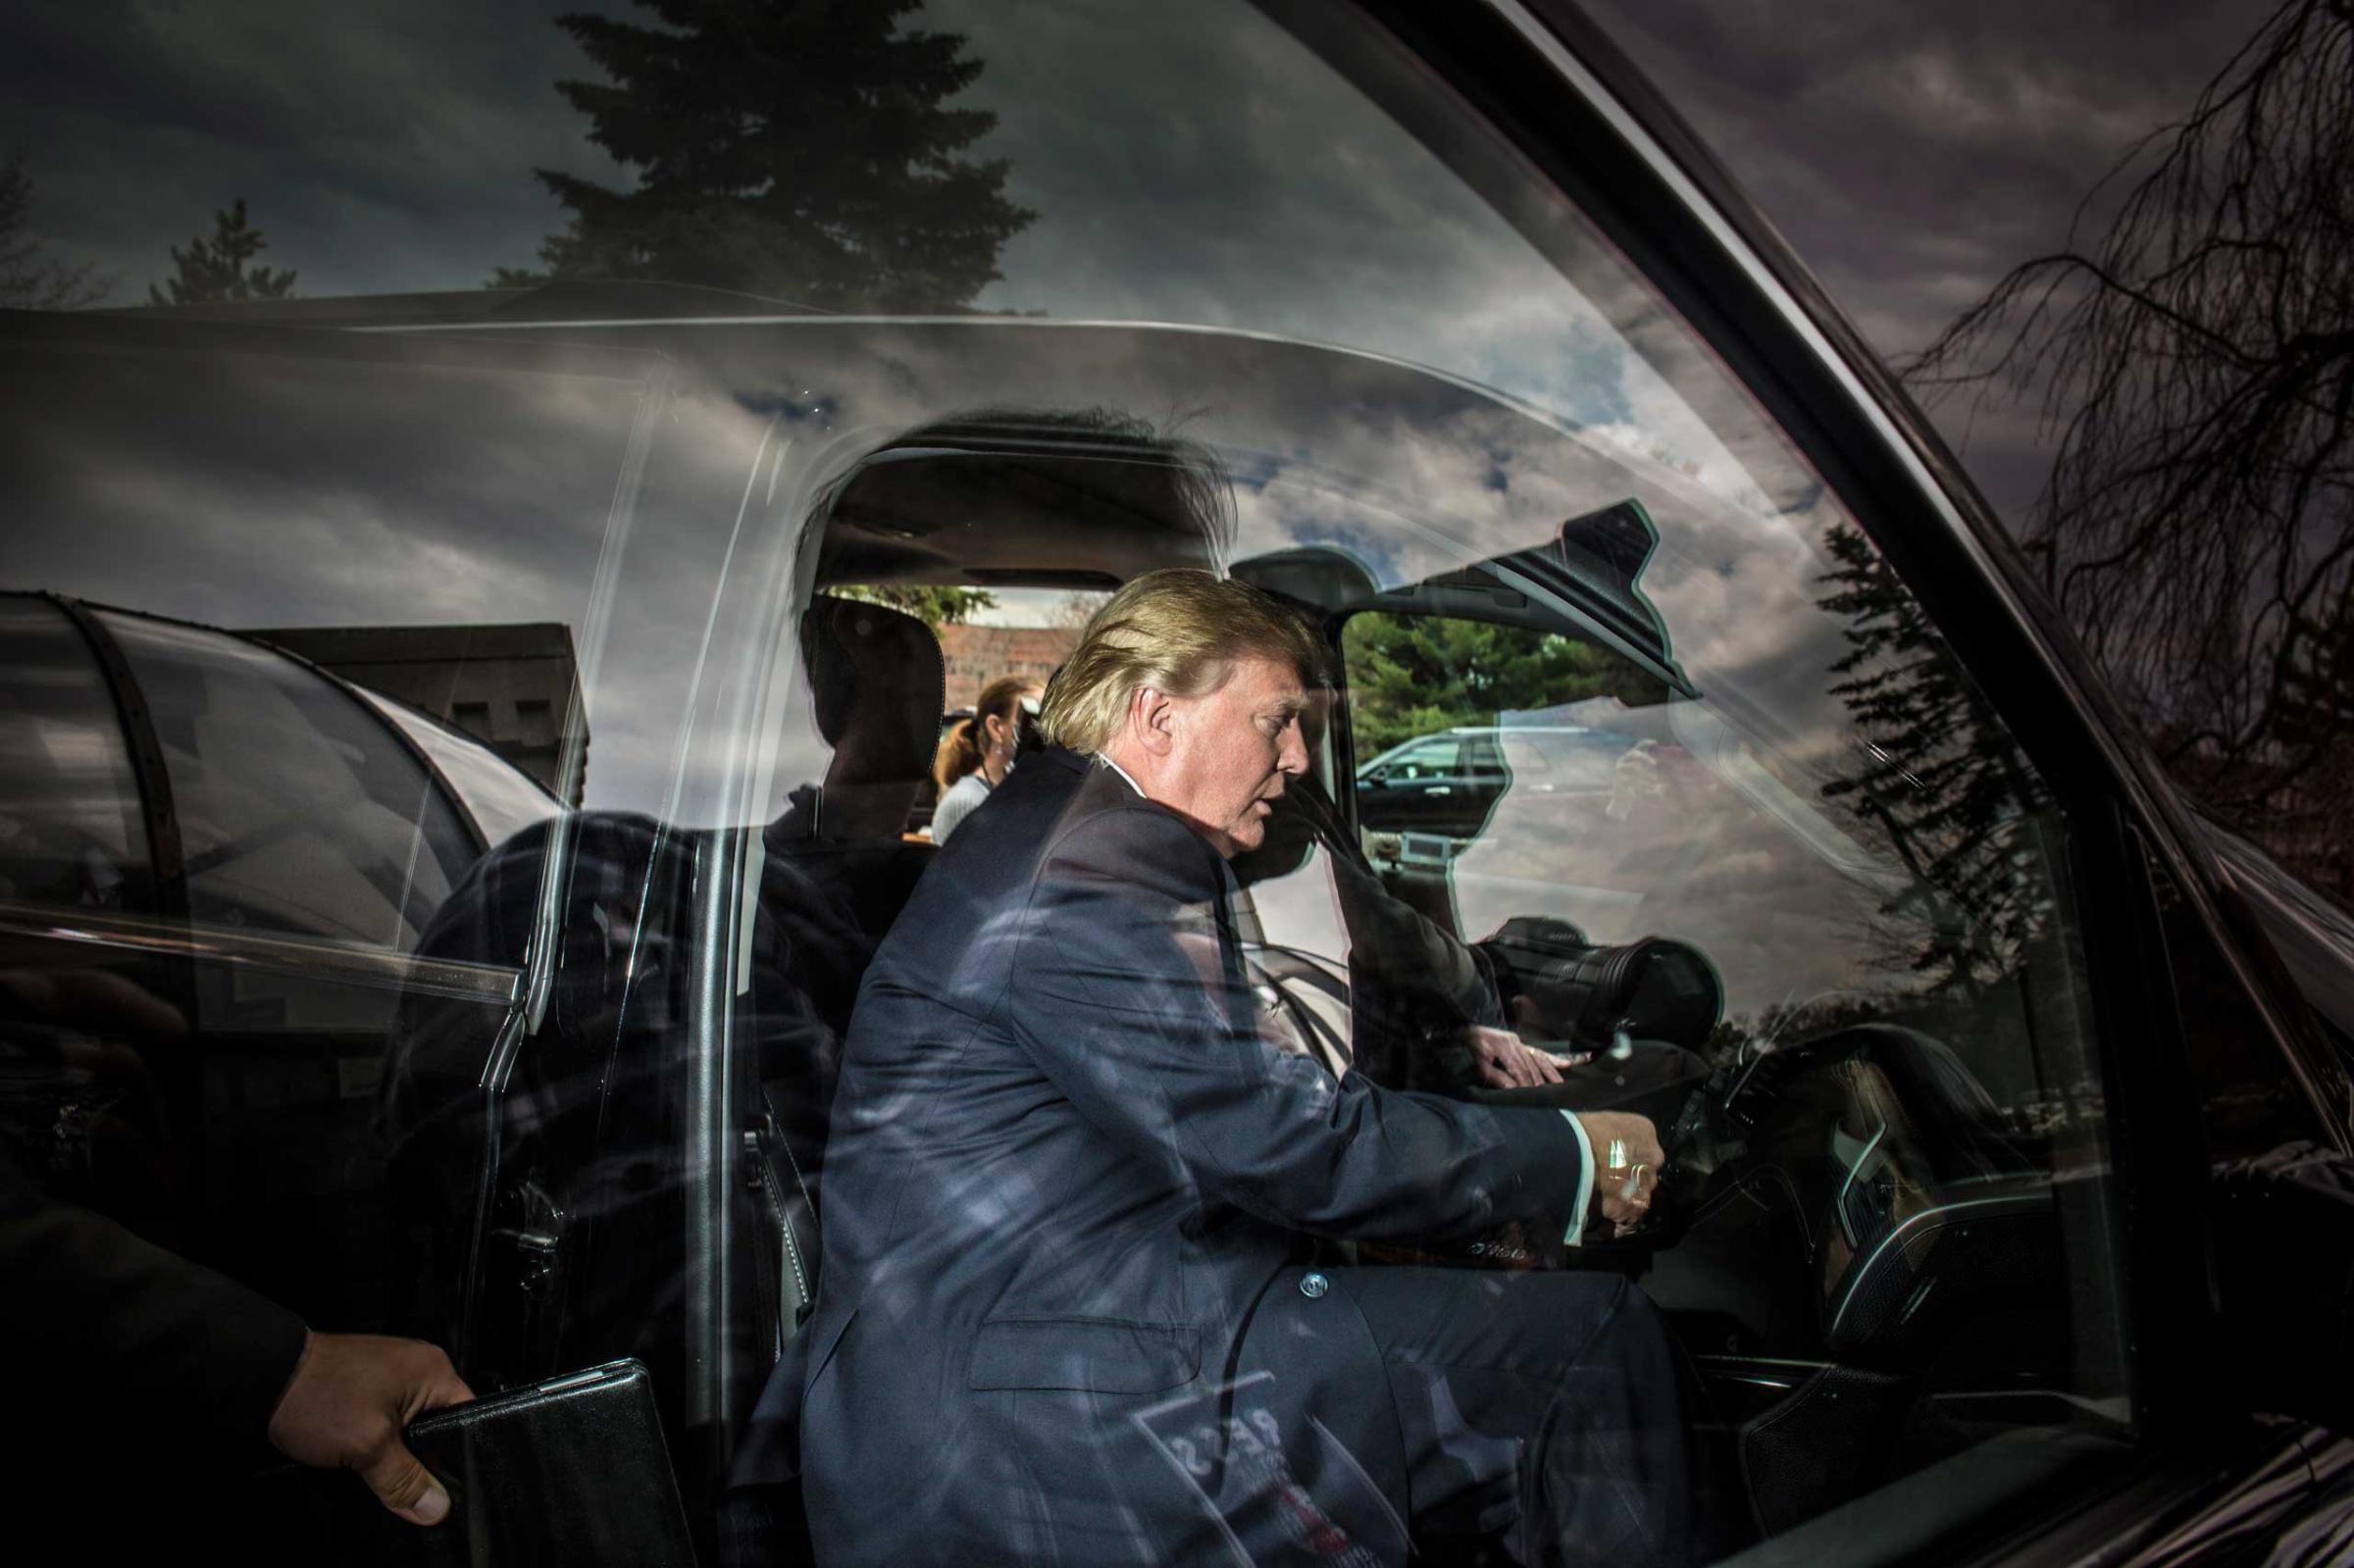 American businessman Donald Trump at the #FITN Republican Leadership Summit in Nashua, N.H. April 17-18, 2015